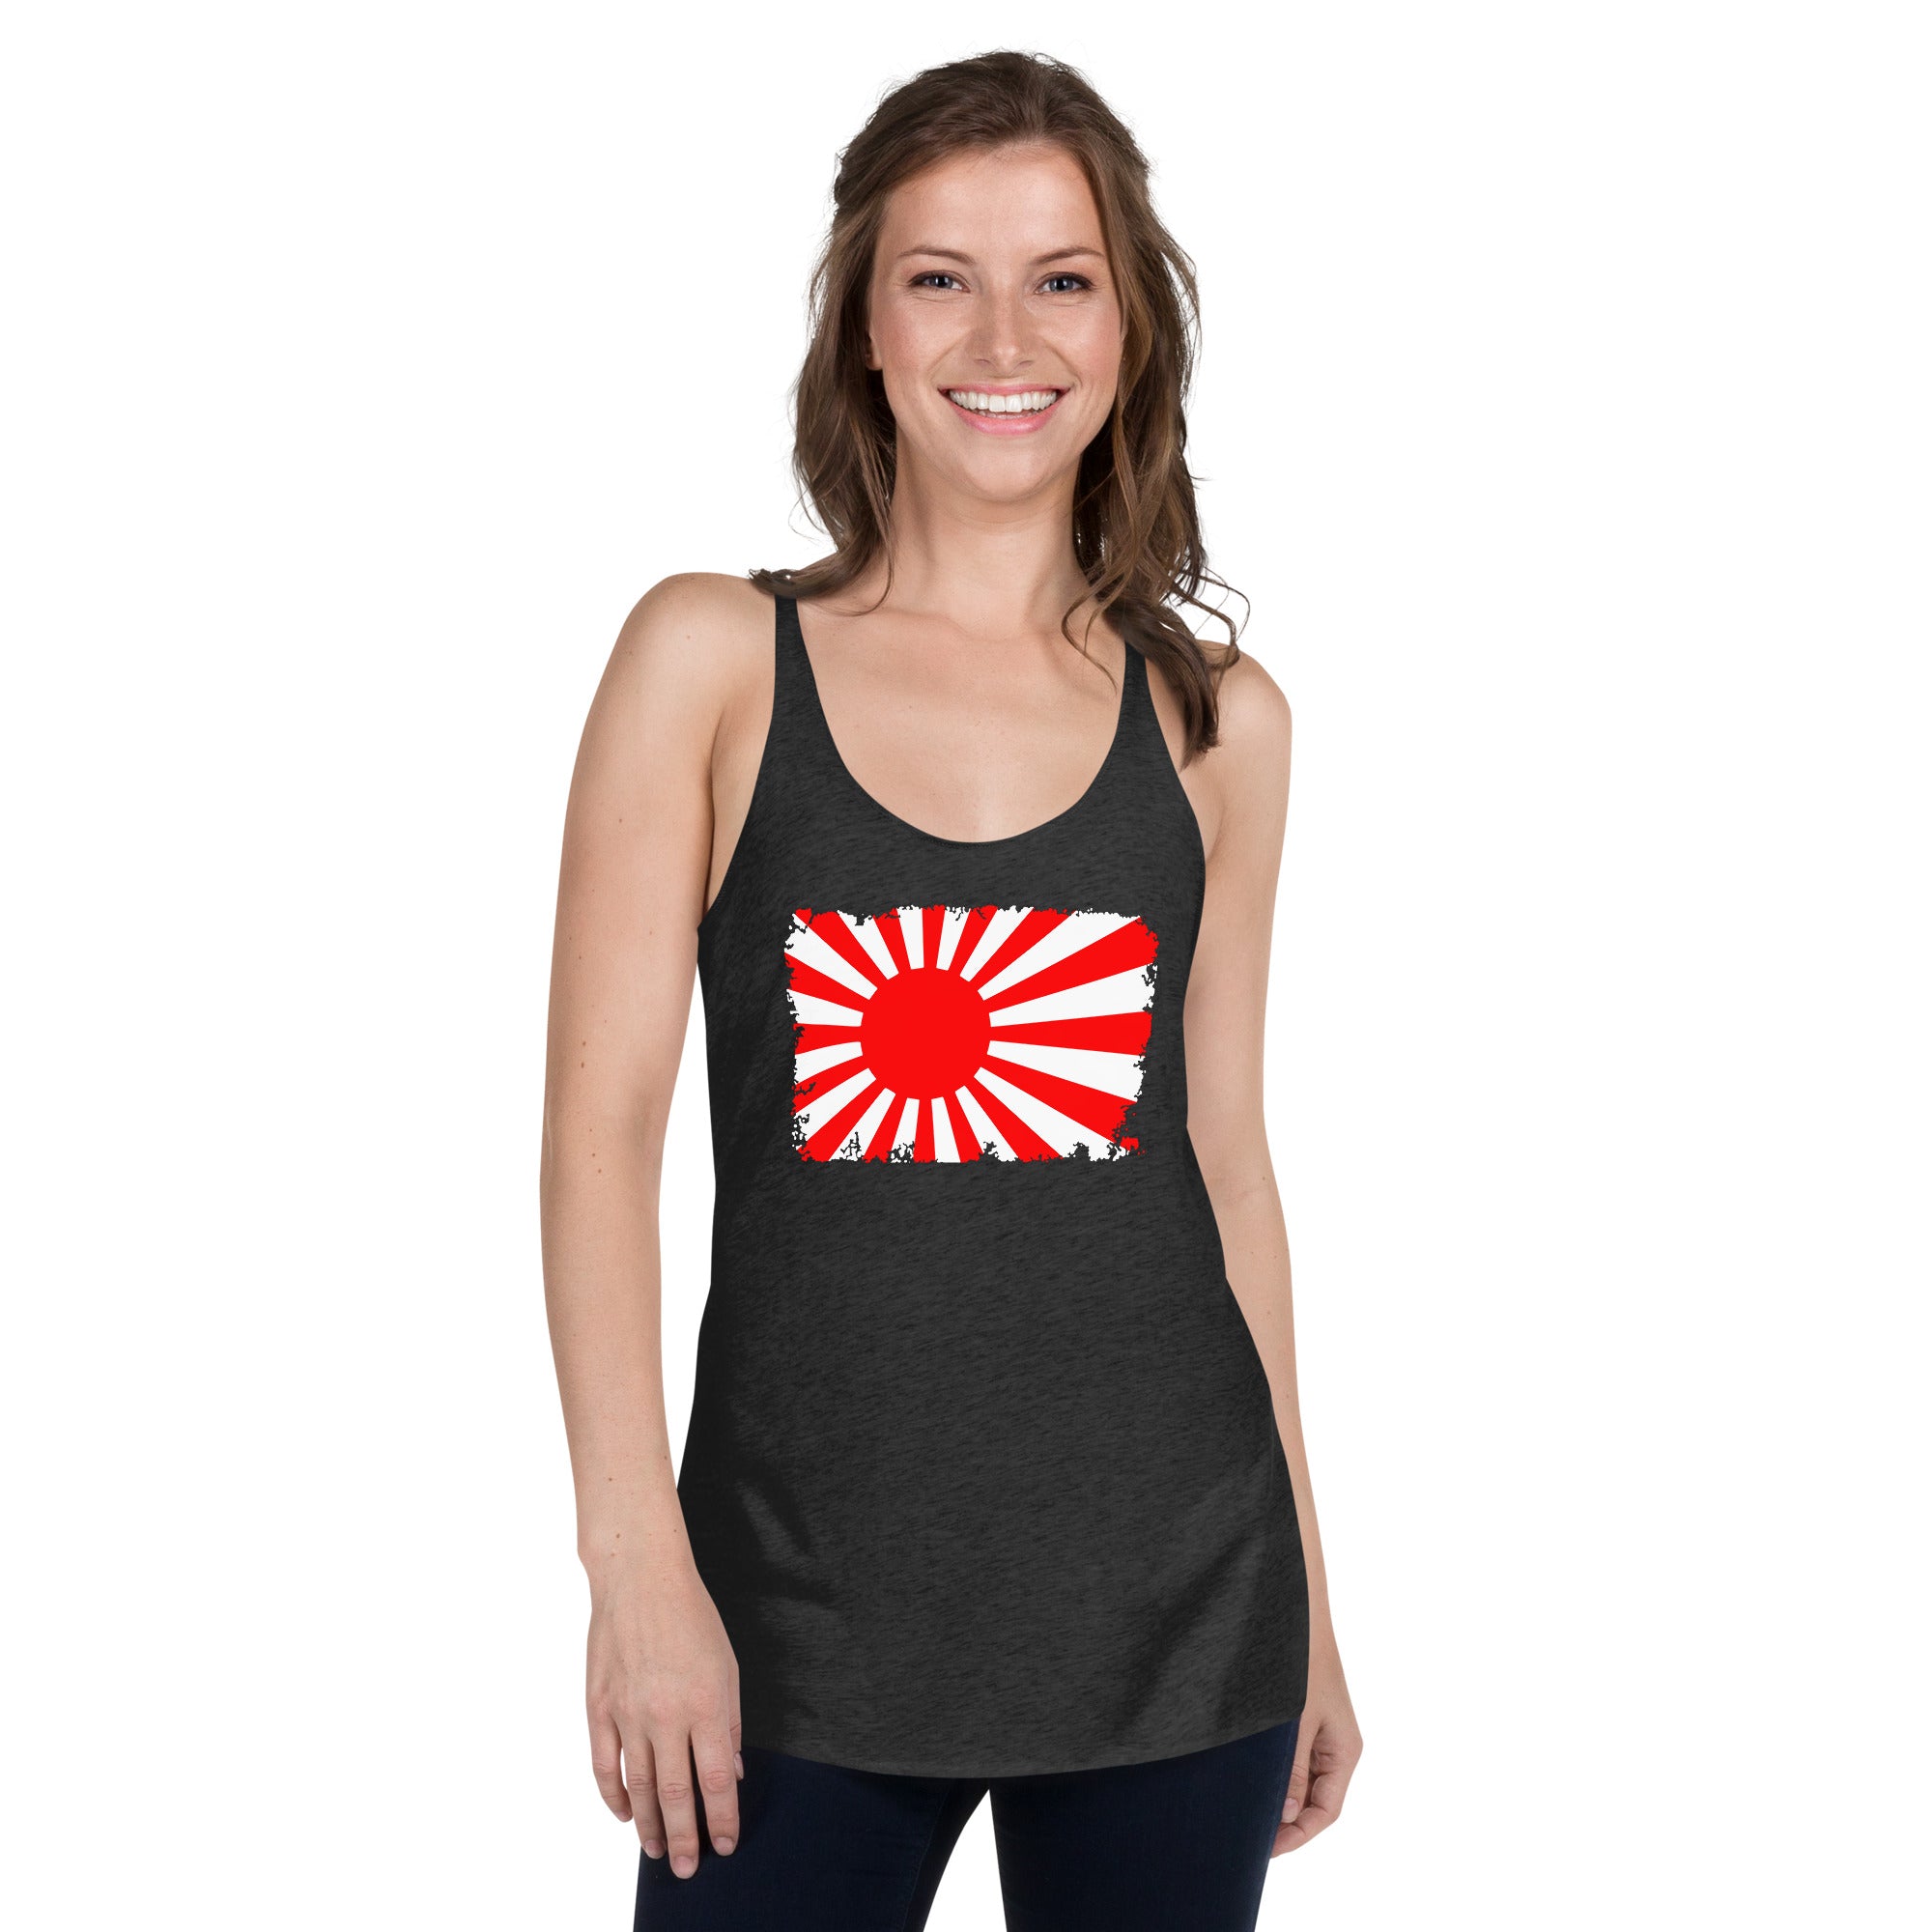 The National Flag of Japan Land of the Rising Sun Women's Racerback Tank Top Shirt